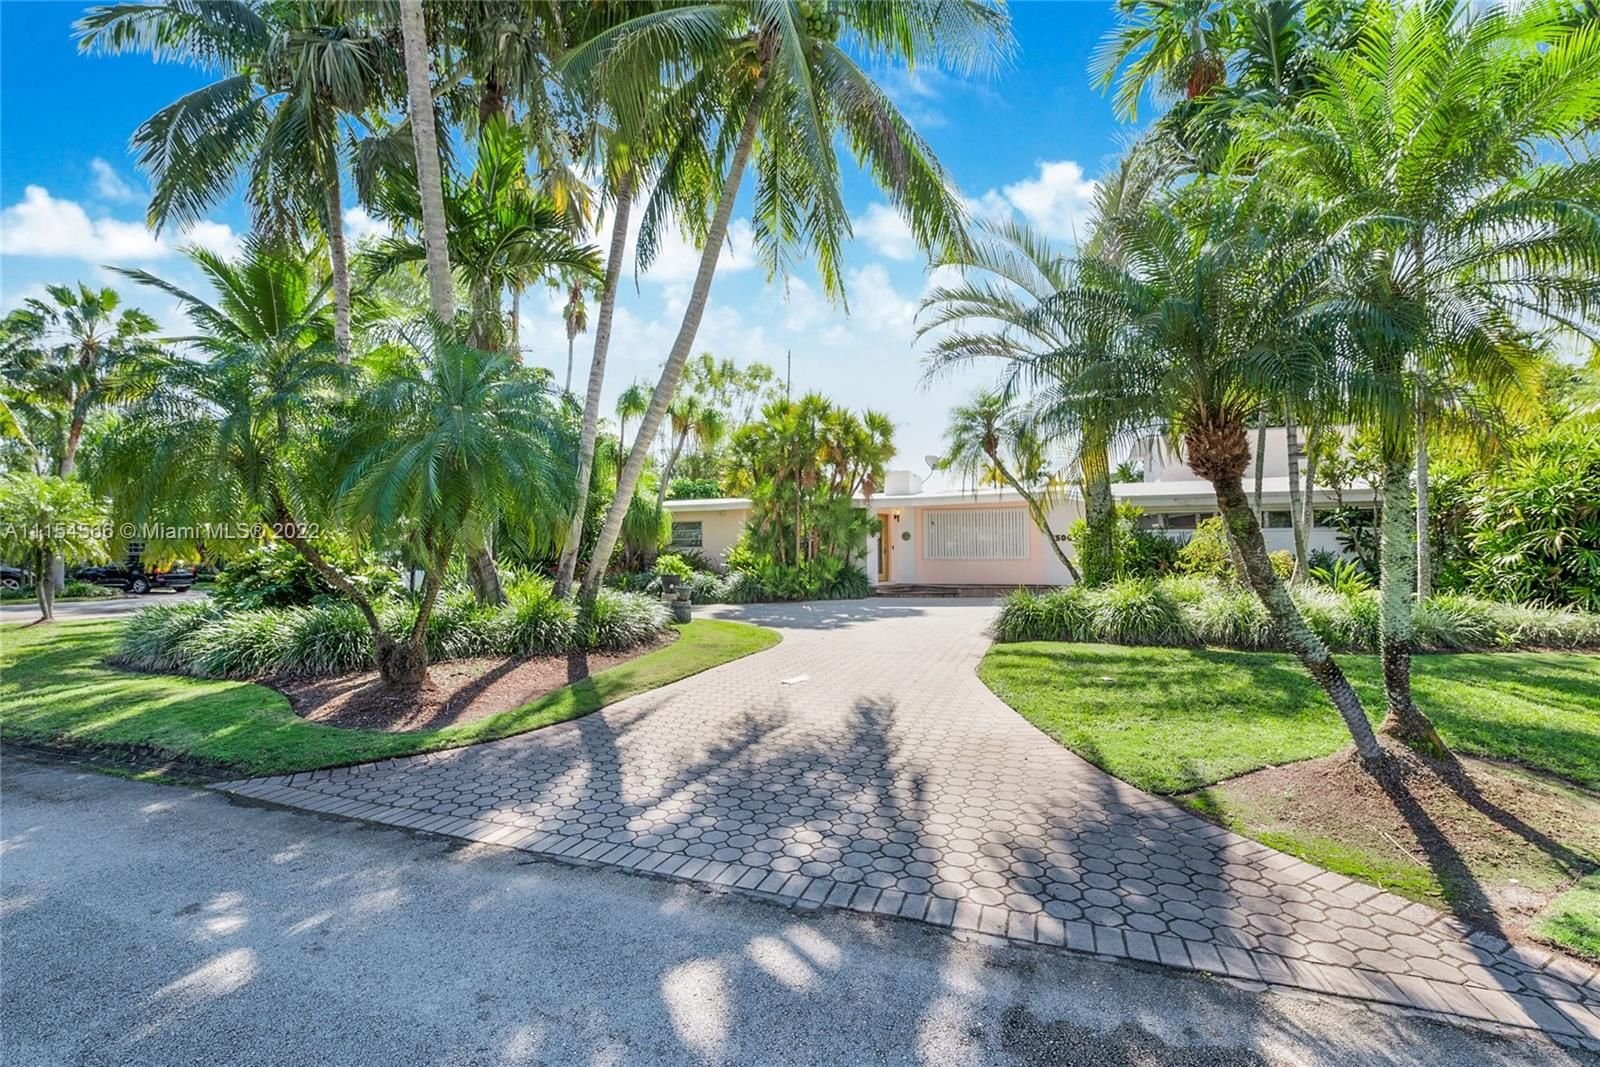 Real estate property located at 7500 137th St, Miami-Dade County, Palmetto Bay, FL